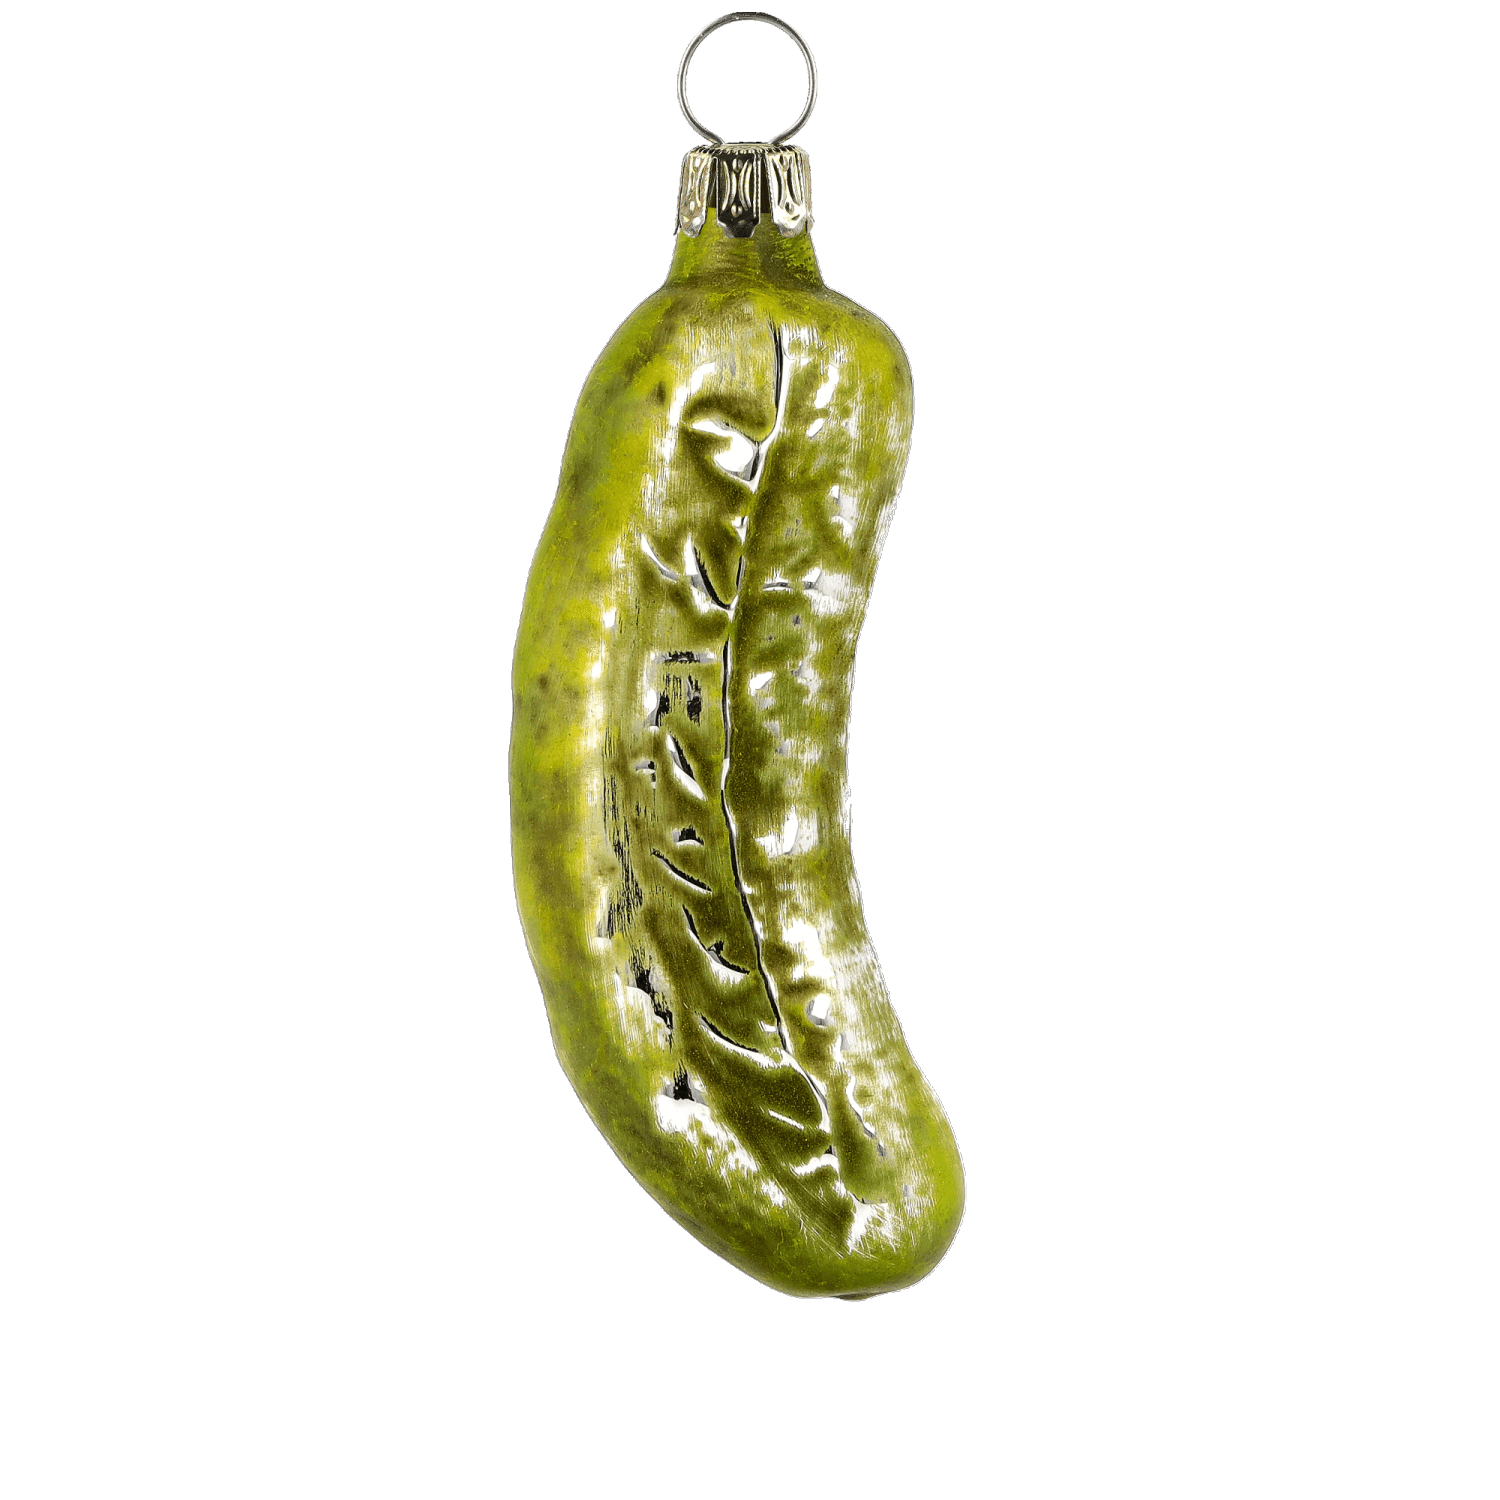 MAROLIN® - Glass ornament "Medium size pickle"